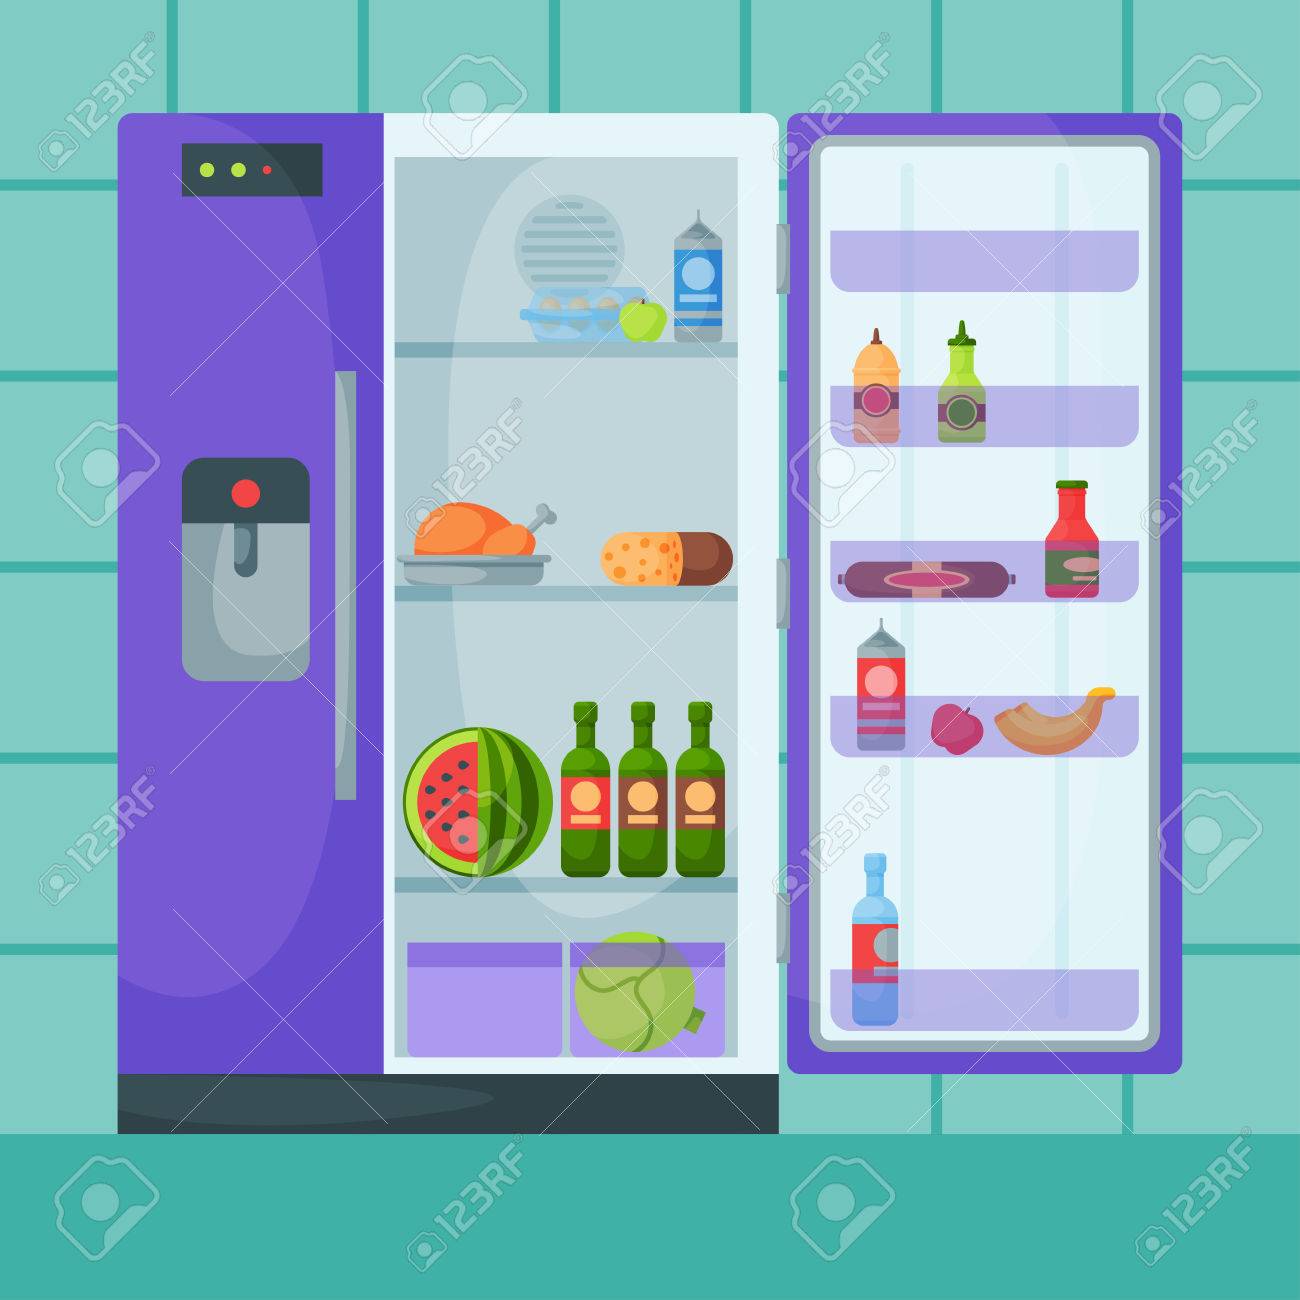 refrigerator clipart cold fridge